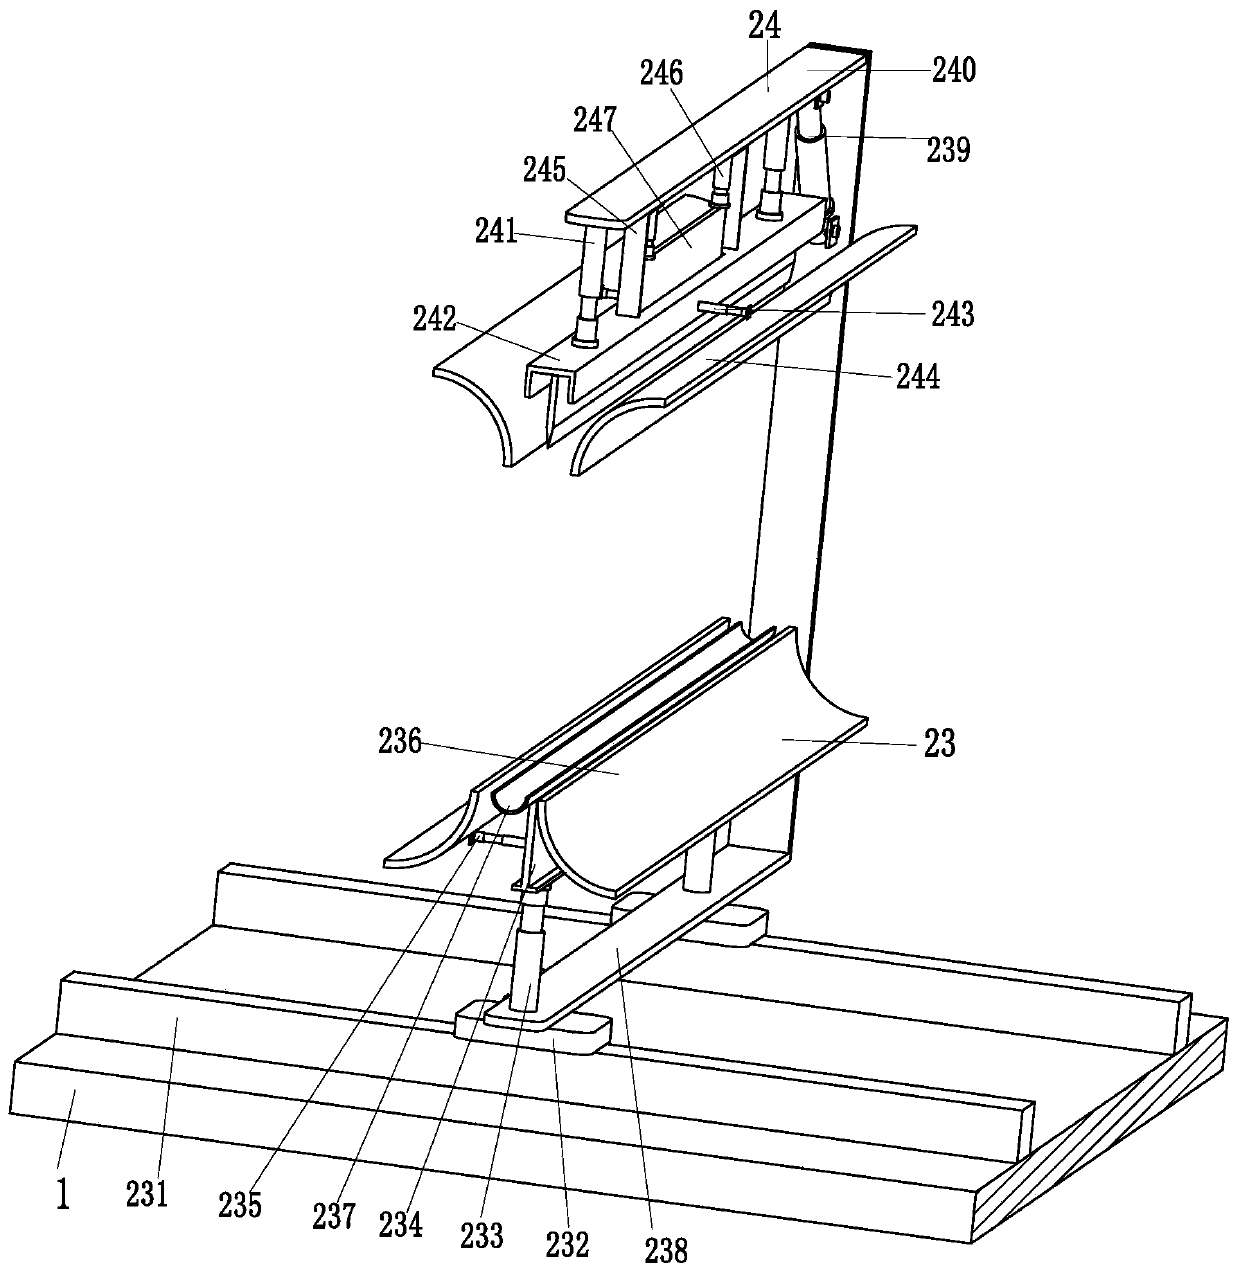 An air column automatic cutting robot for express packaging